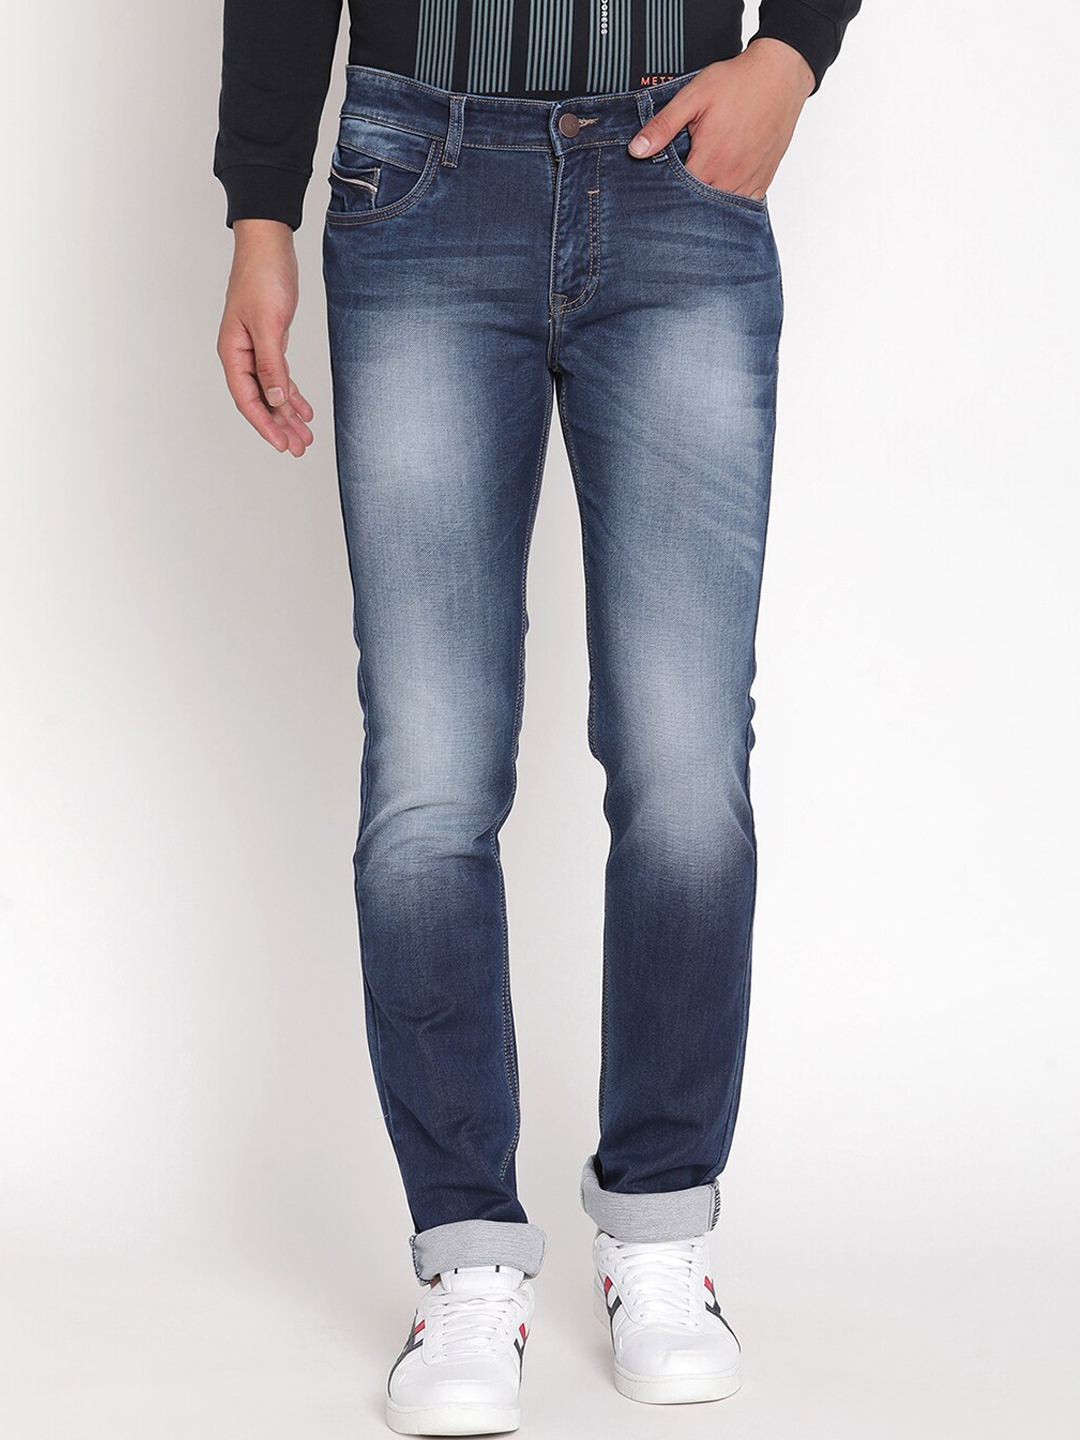 Buy Octave Men Blue Heavy Fade Jeans - Jeans for Men 16379768 | Myntra